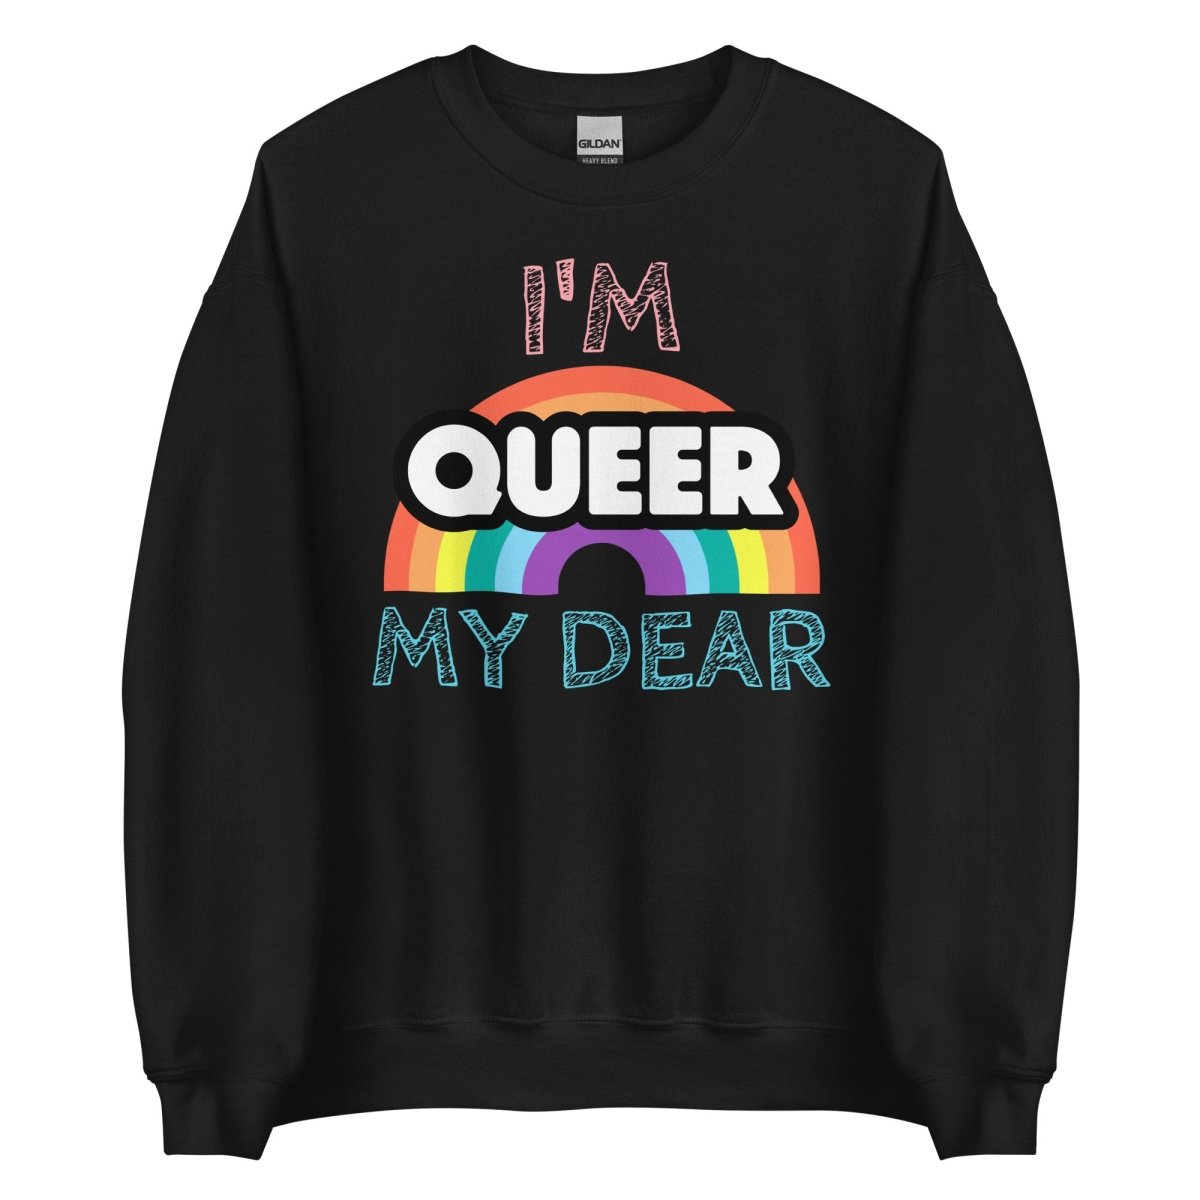 Queer My Dear Sweatshirt - On Trend Shirts